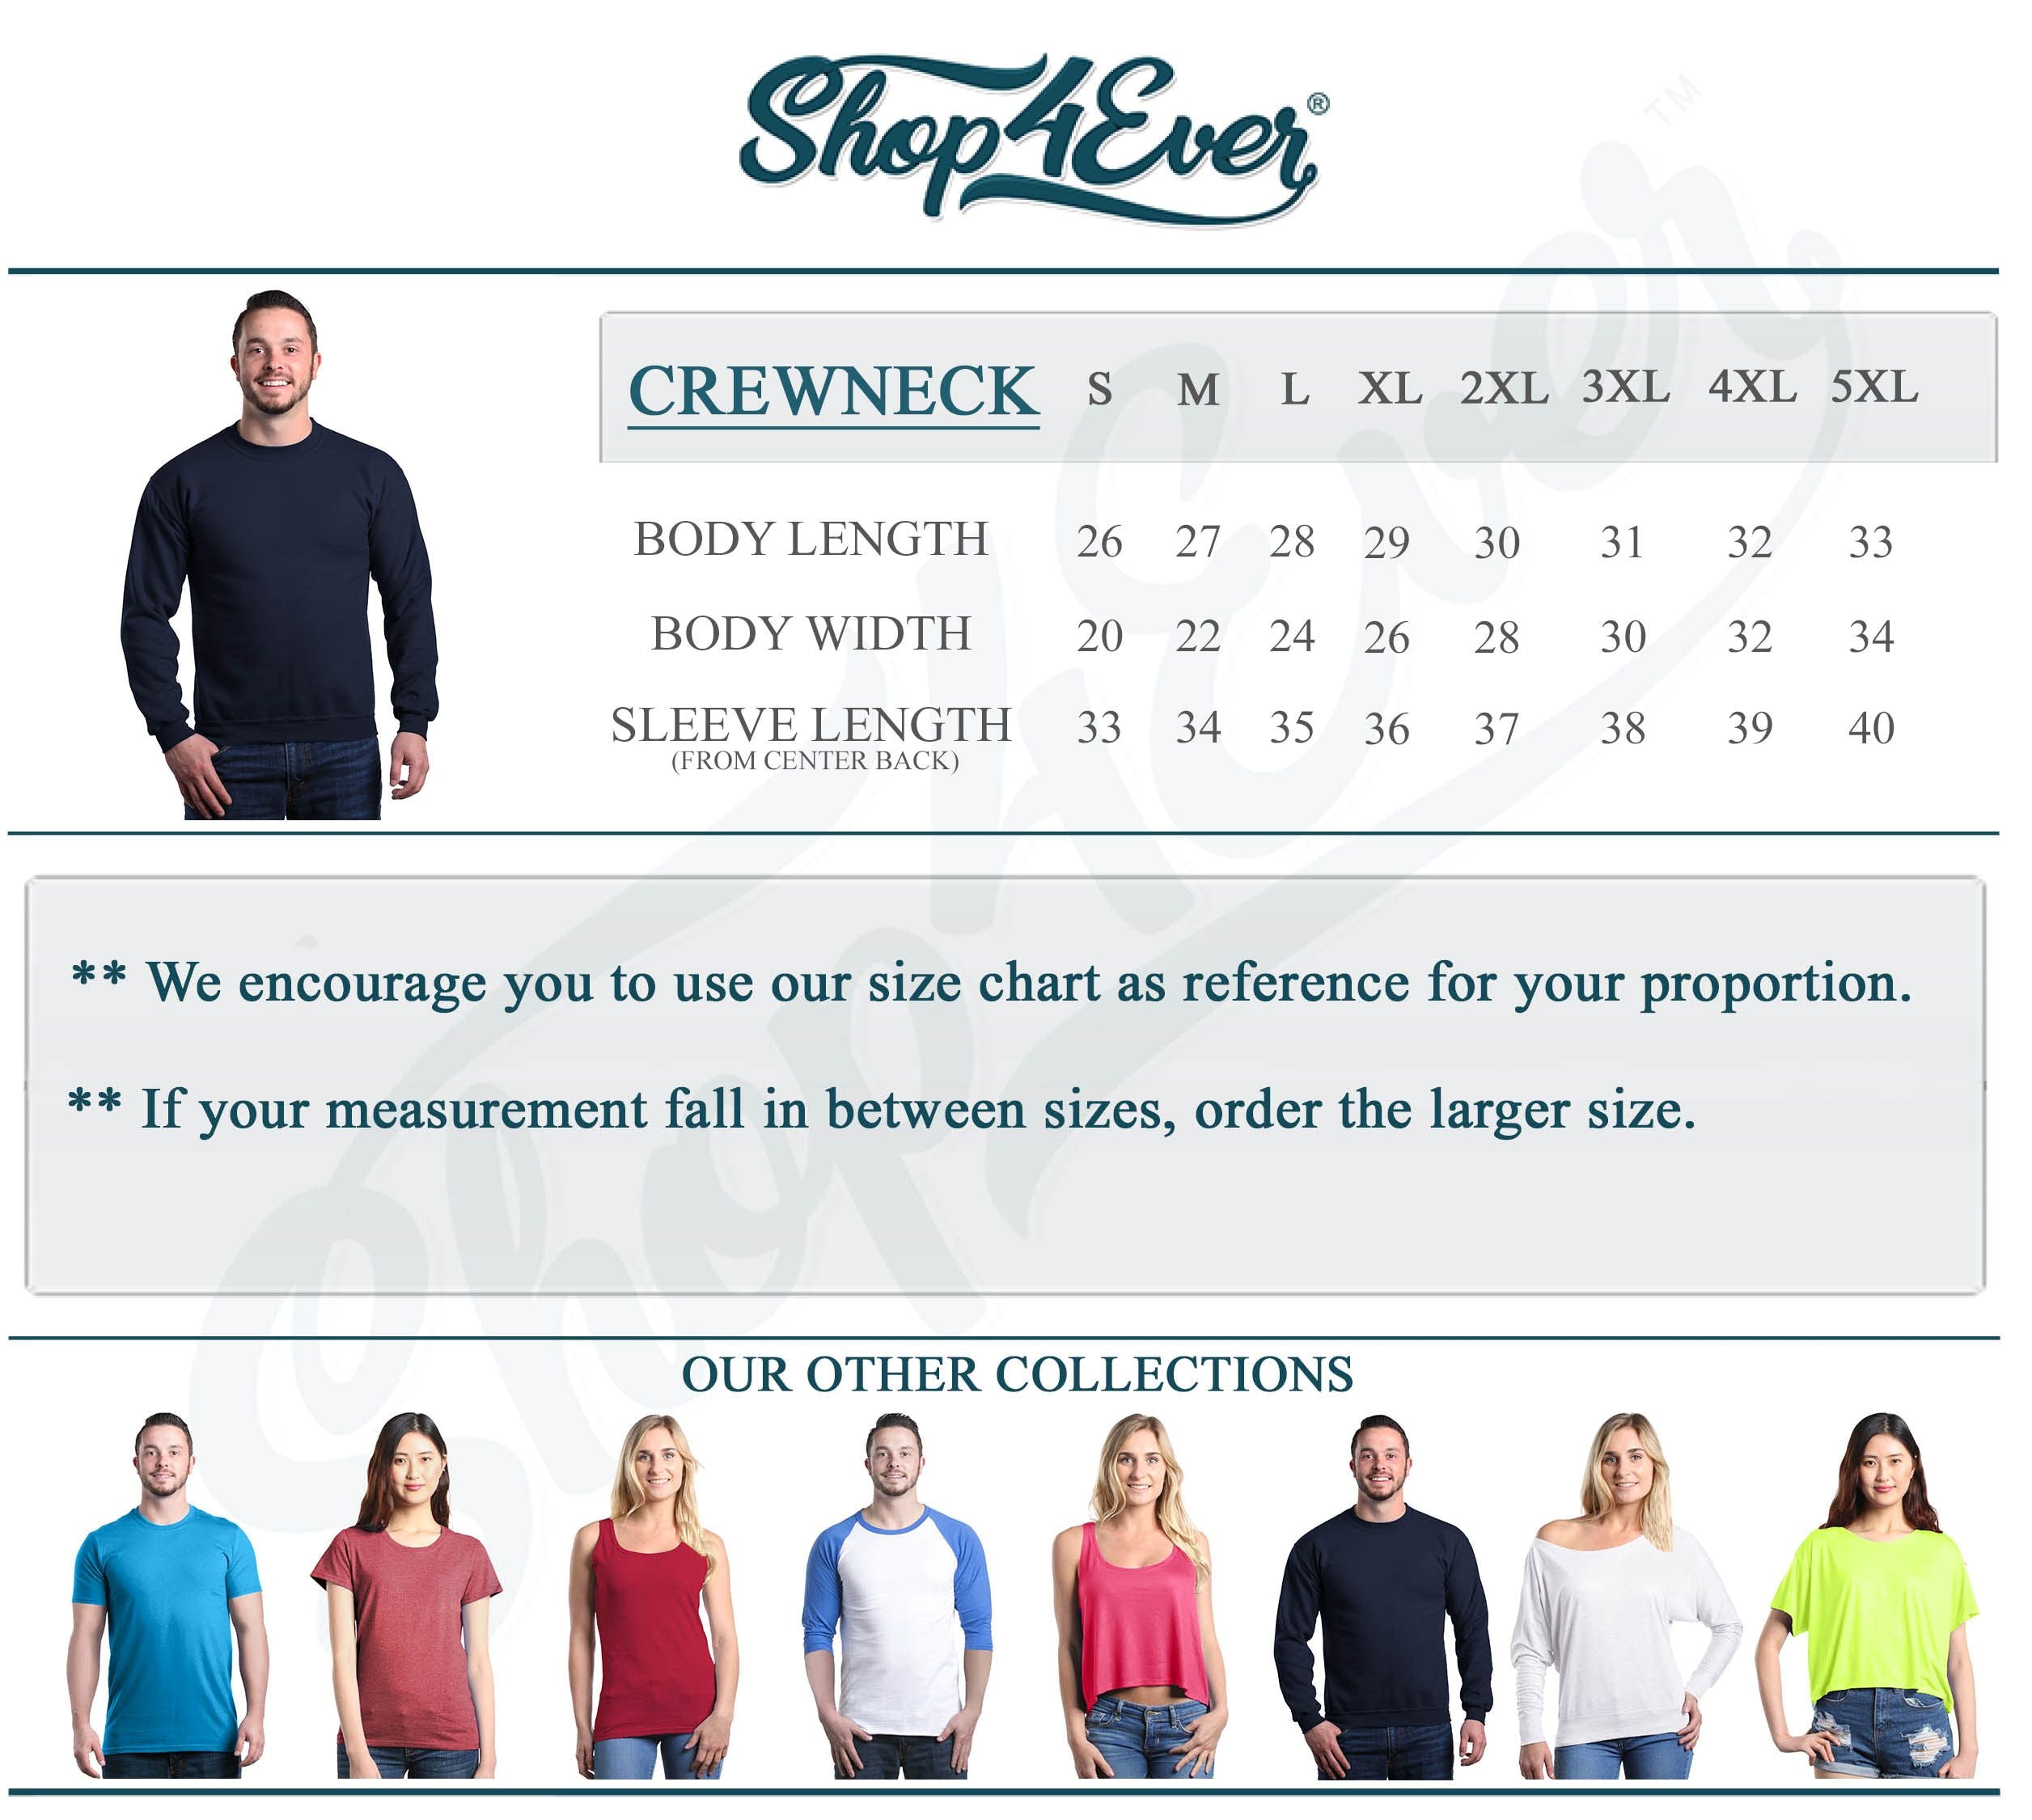 Car Guy Definition Crewneck Sweatshirts